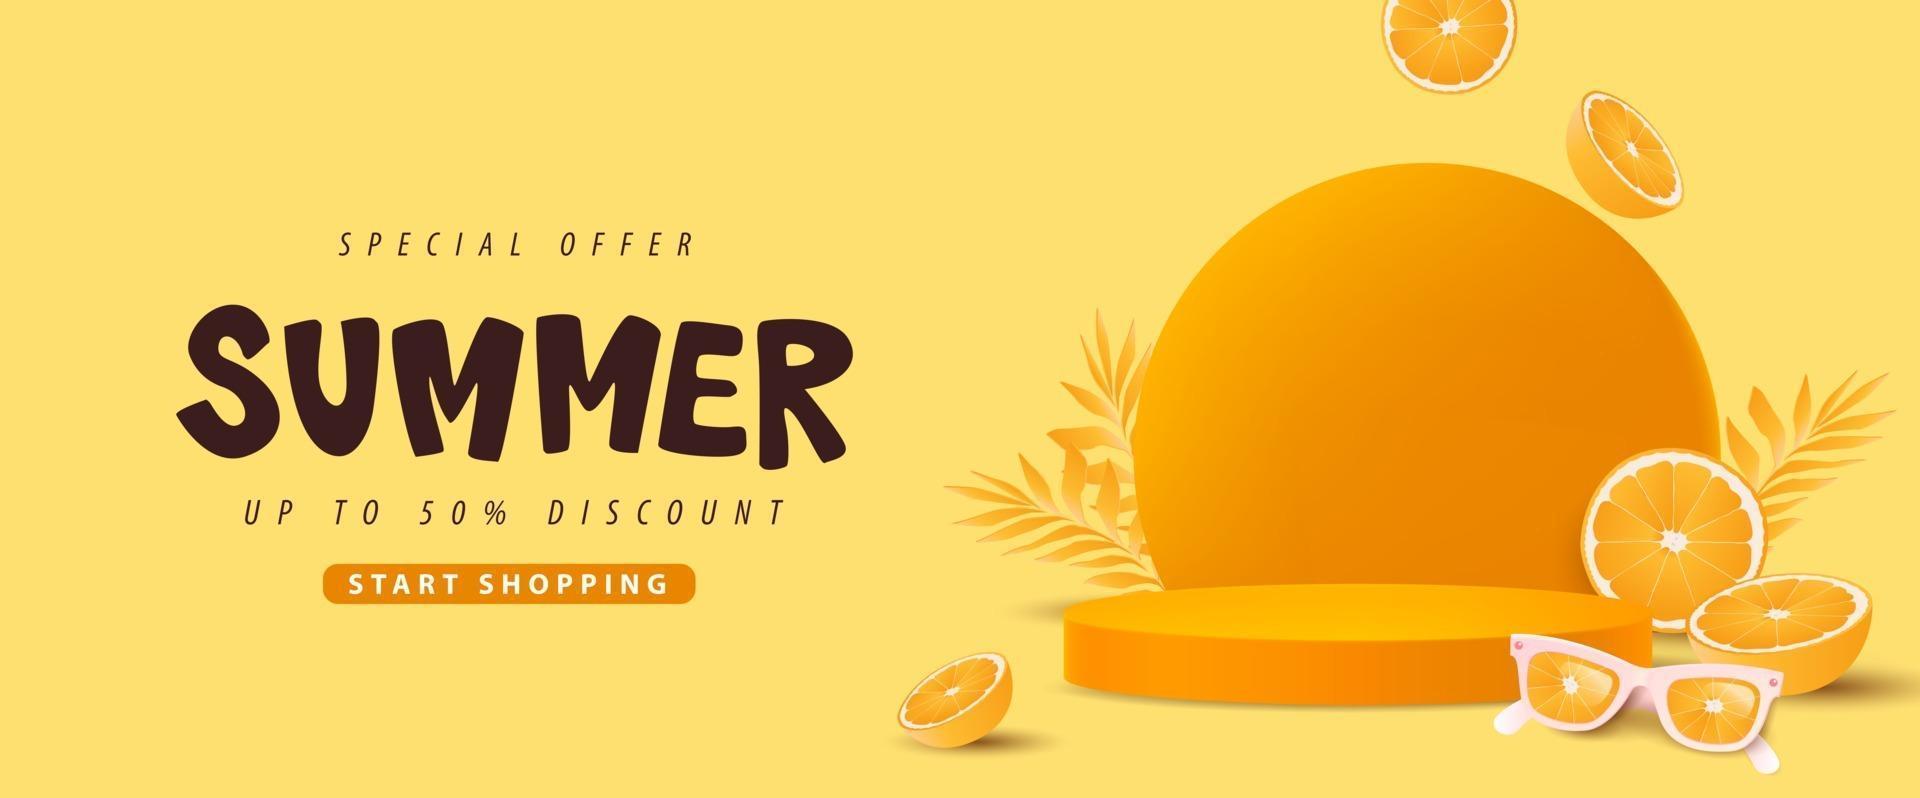 Banner de venta de verano colorido con forma cilíndrica de exhibición de producto de concepto naranja vector